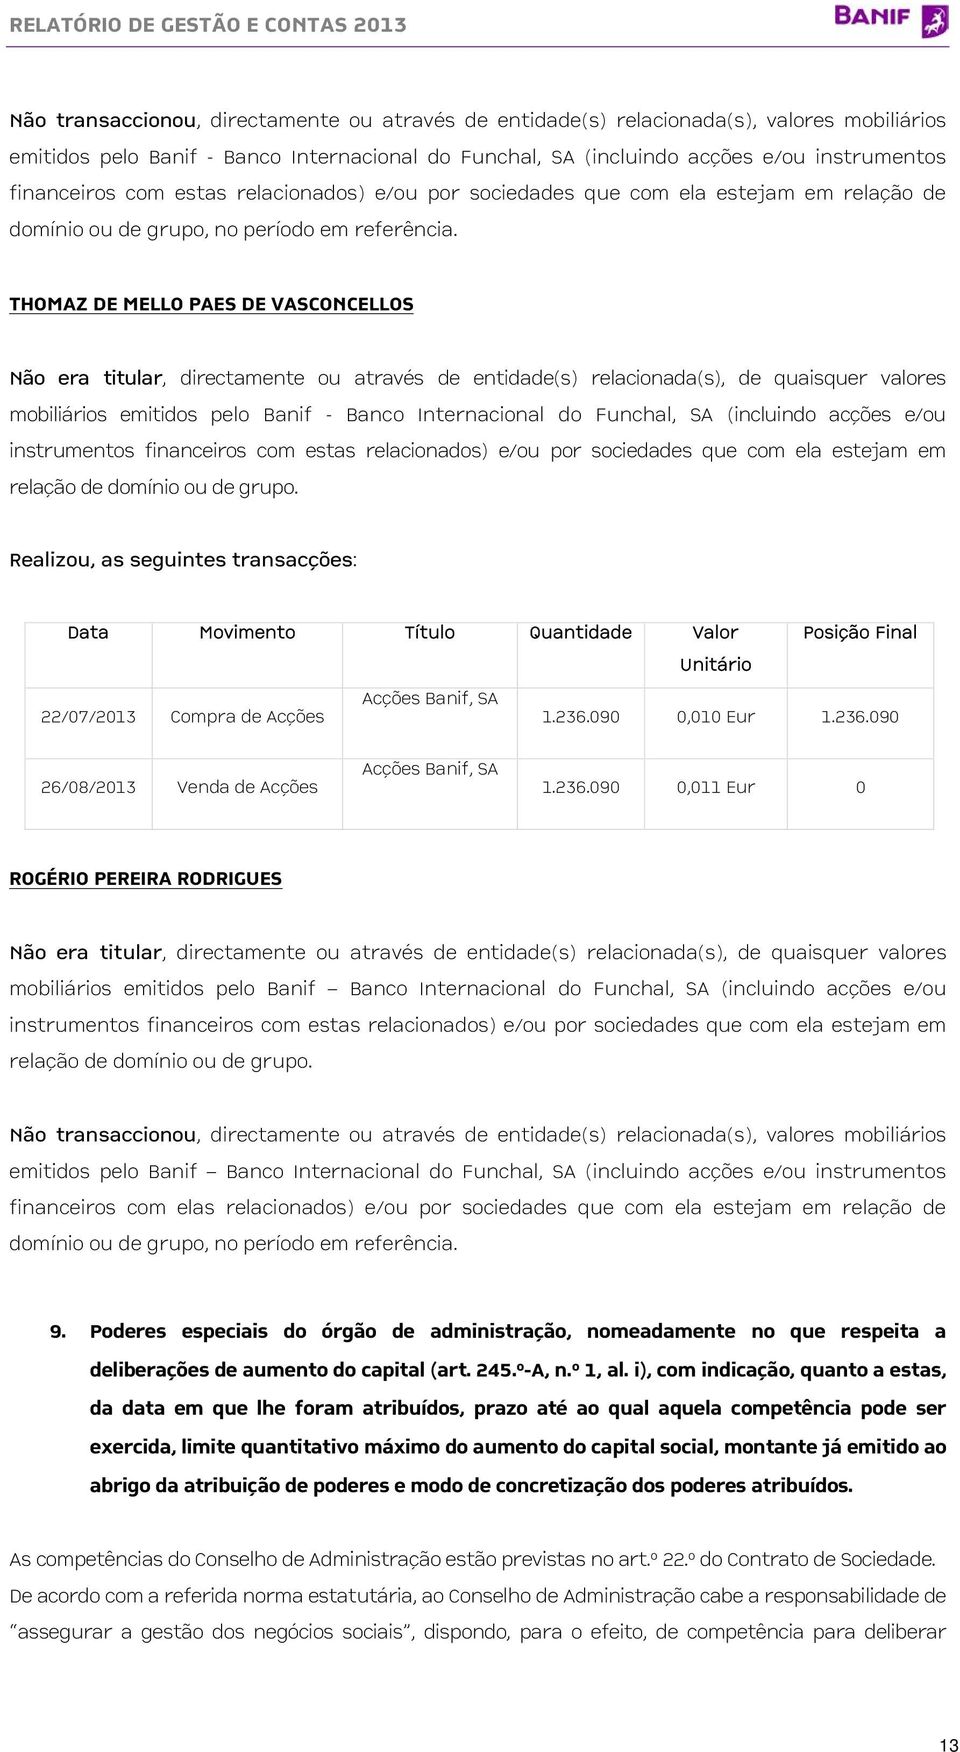 THOMAZ DE MELLO PAES DE VASCONCELLOS Não era titular, directamente ou através de entidade(s) relacionada(s), de quaisquer valores mobiliários emitidos pelo Banif - Banco Internacional do Funchal, SA